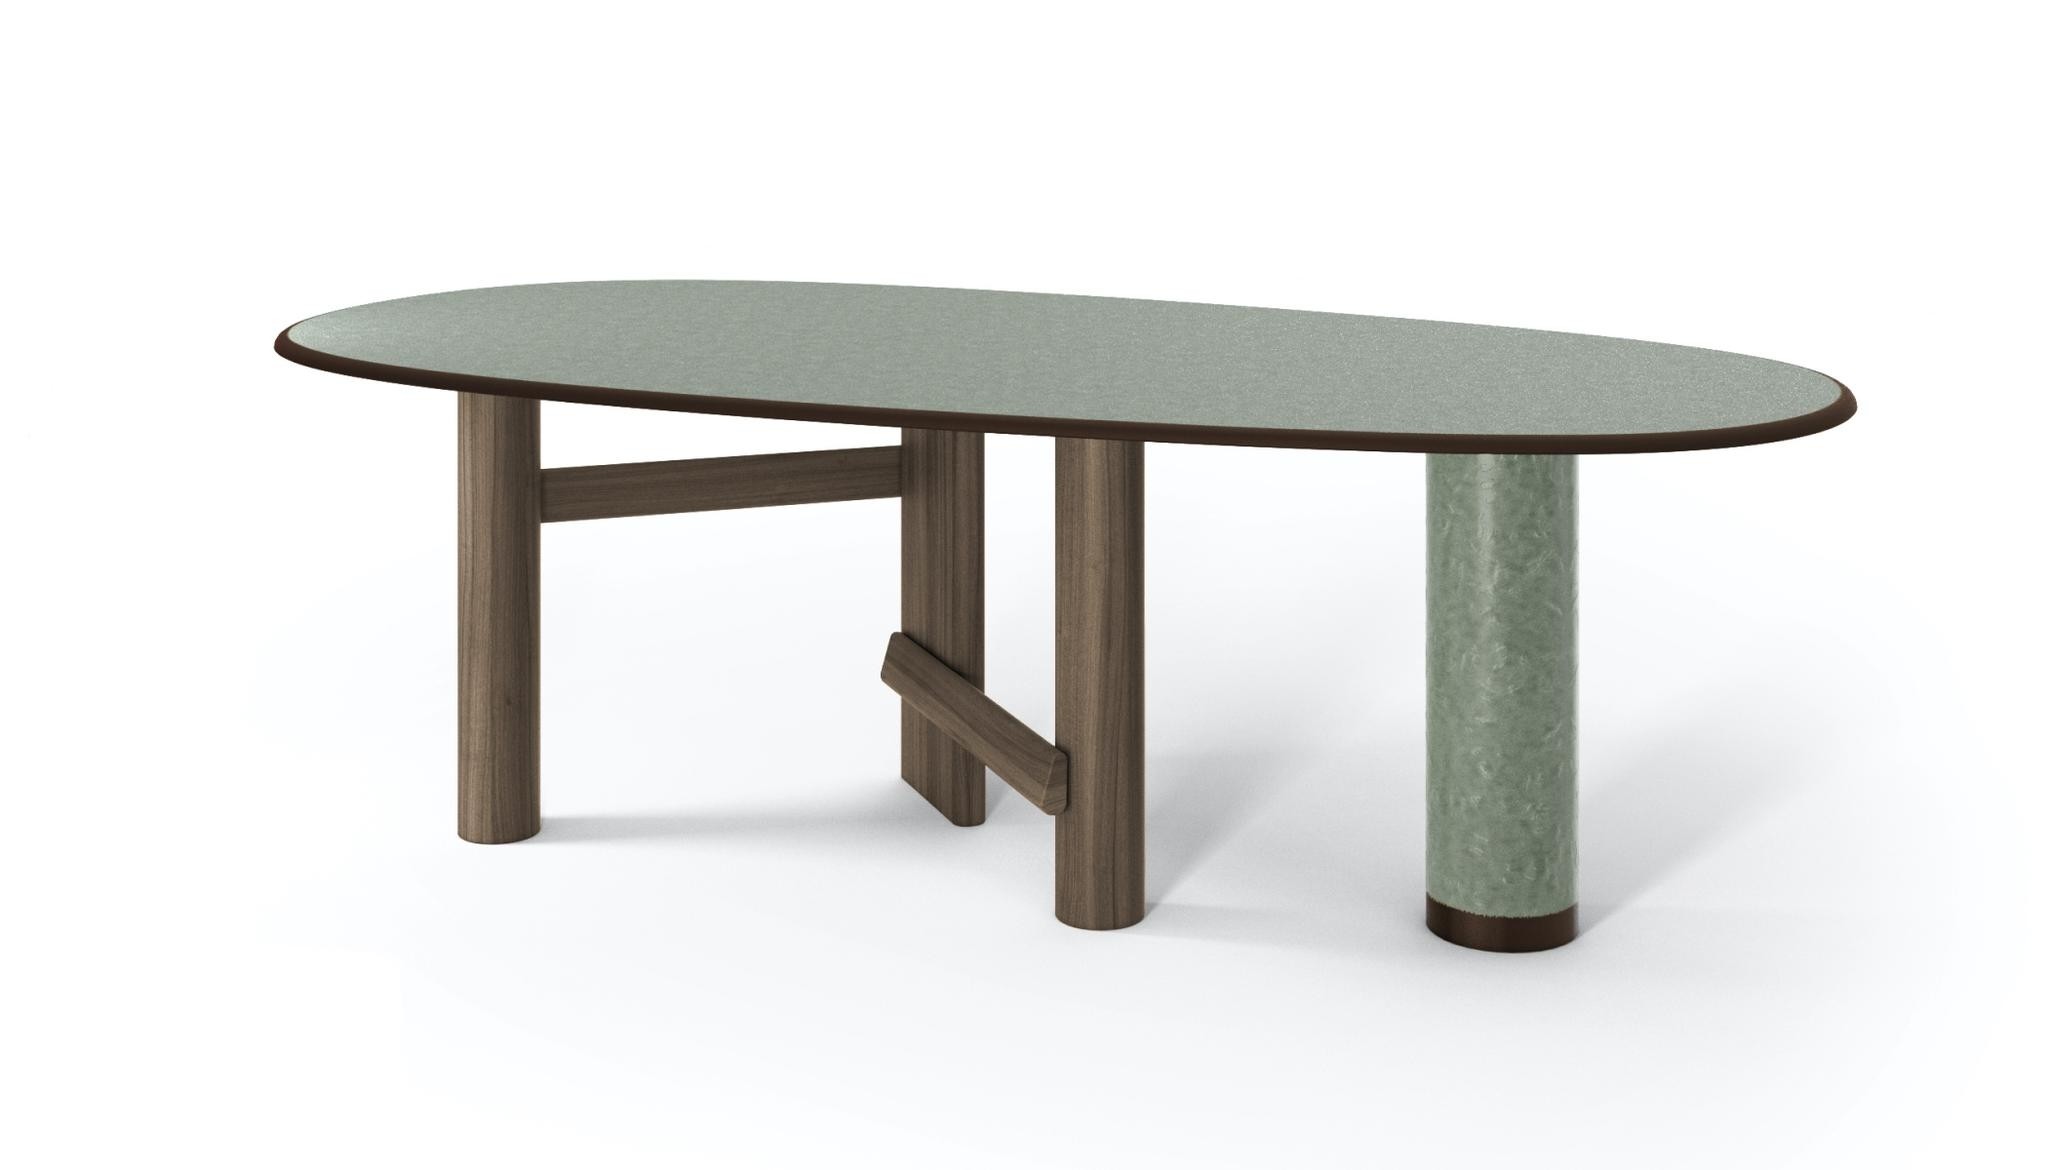 Sengu Table, Japanese inspiration, P. Urquiola